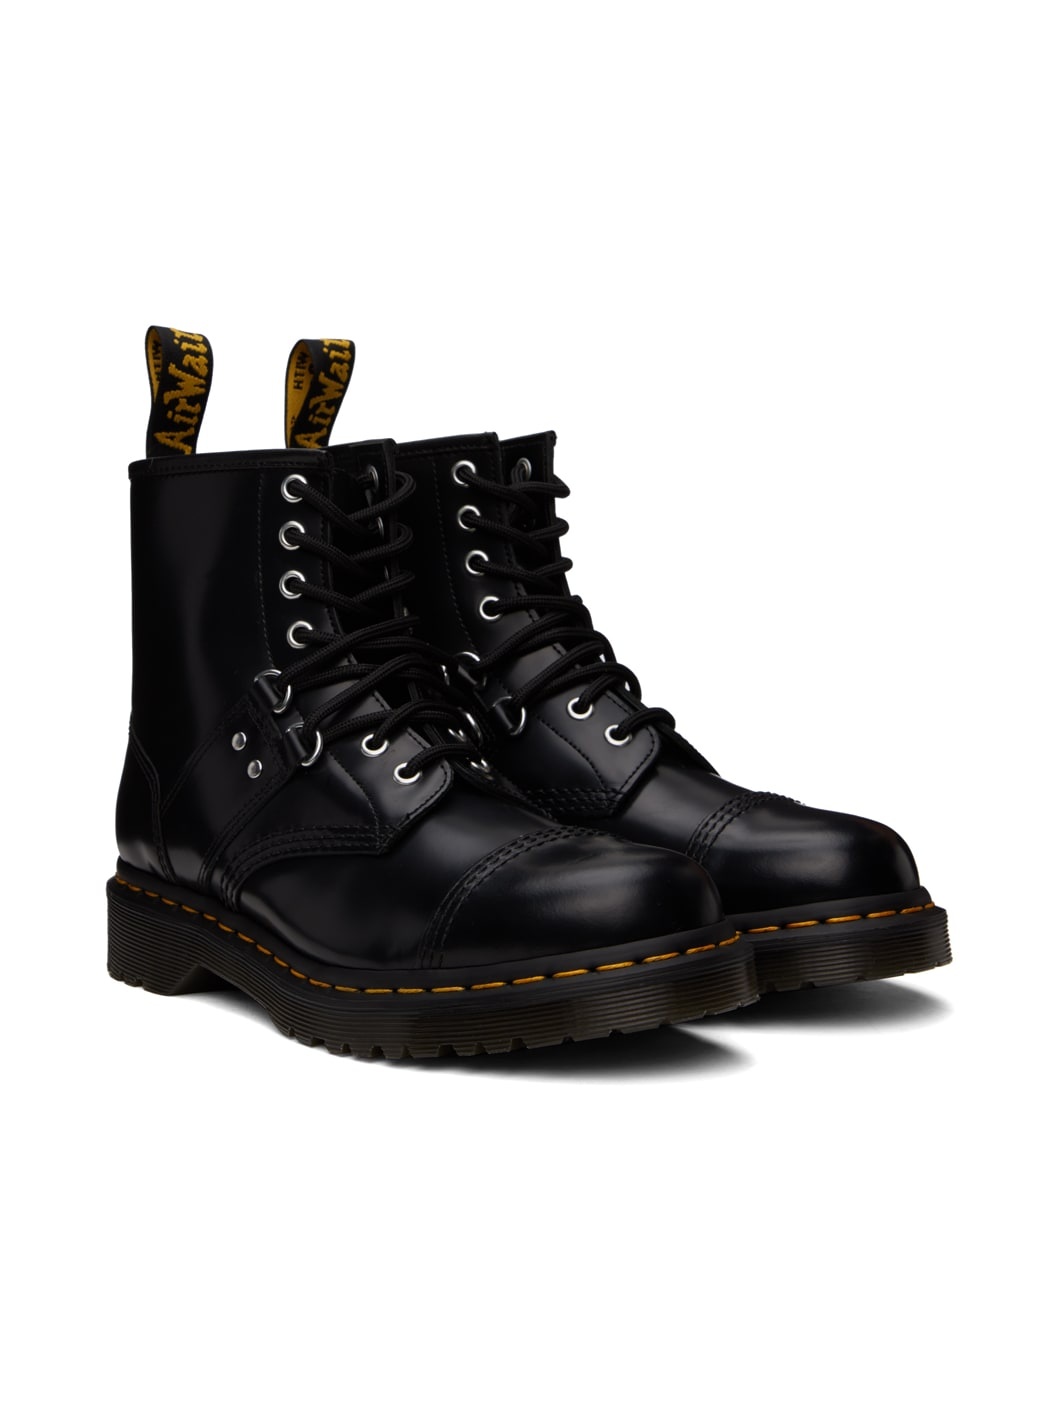 Black 1460 Boots - 4